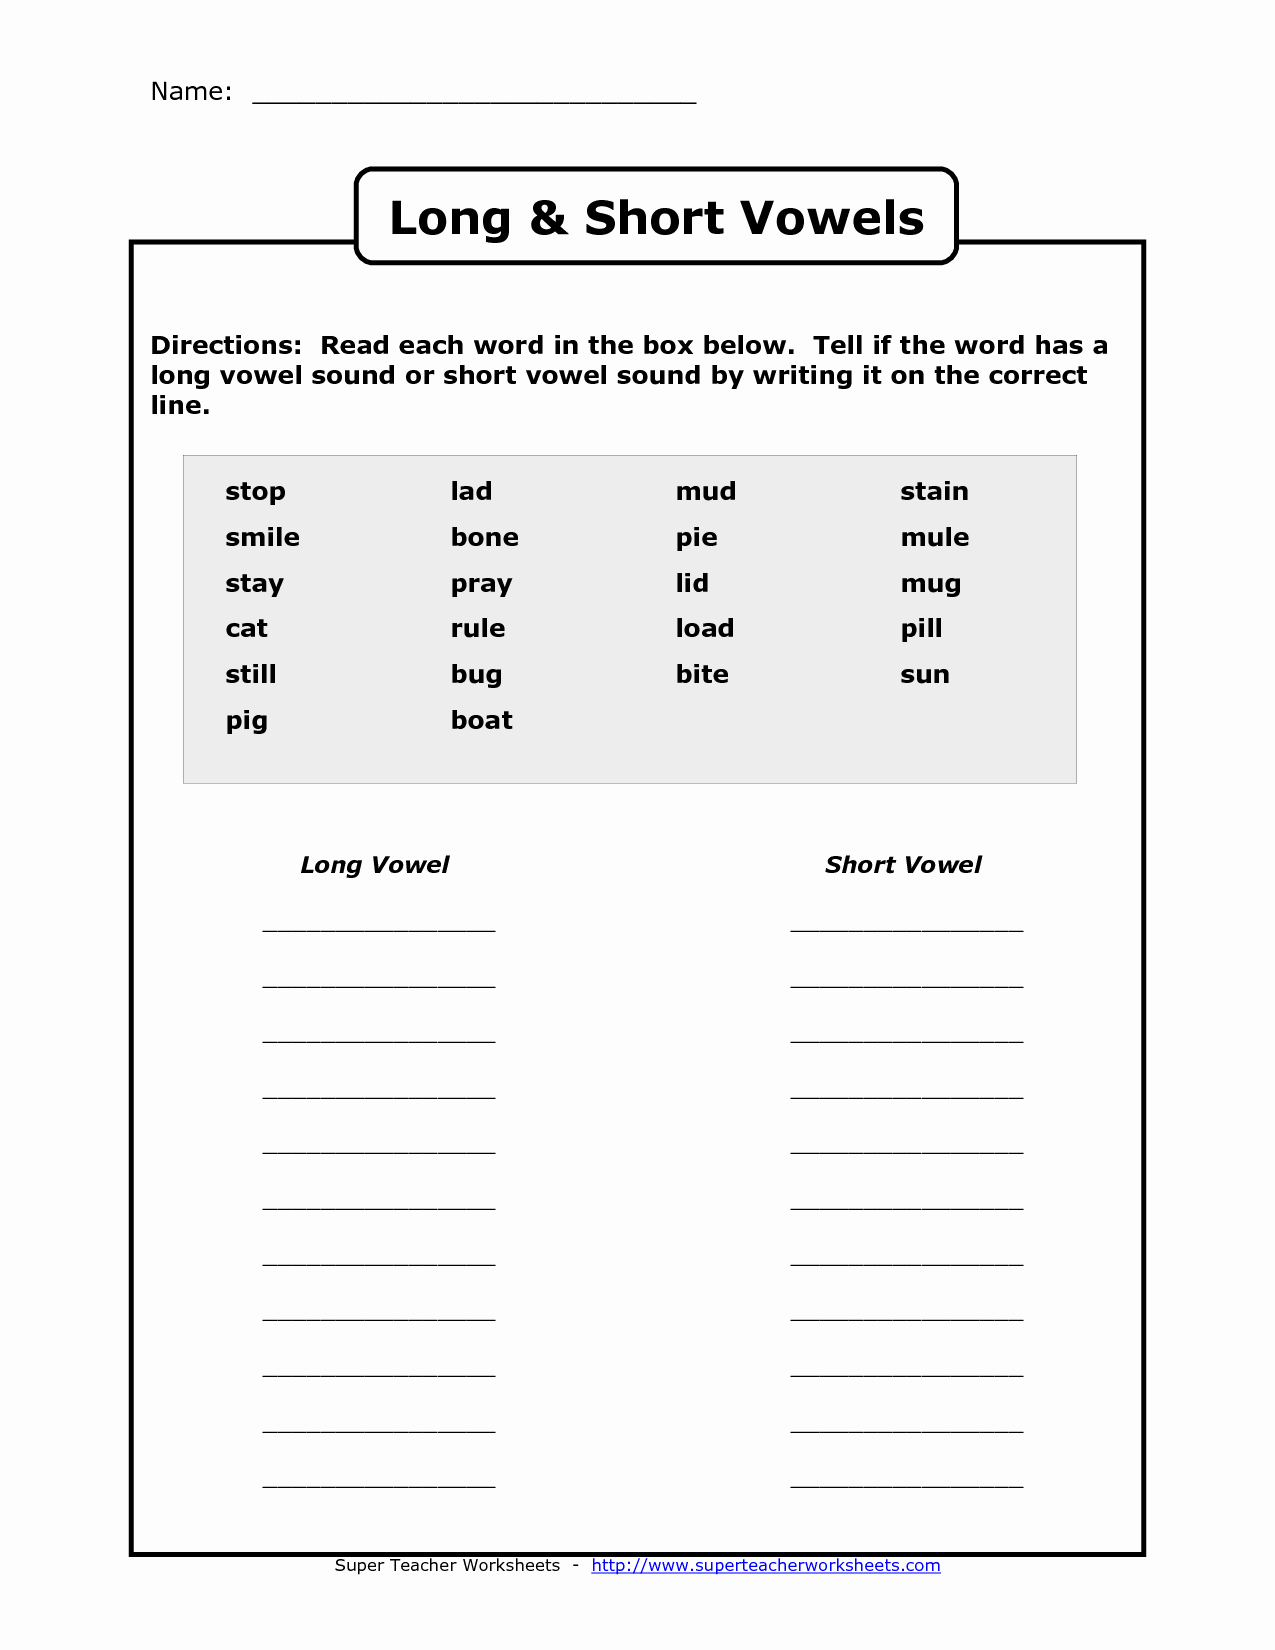 Short and Long Vowels Worksheet Unique 15 Best Of Long and Short Vowel Worksheets